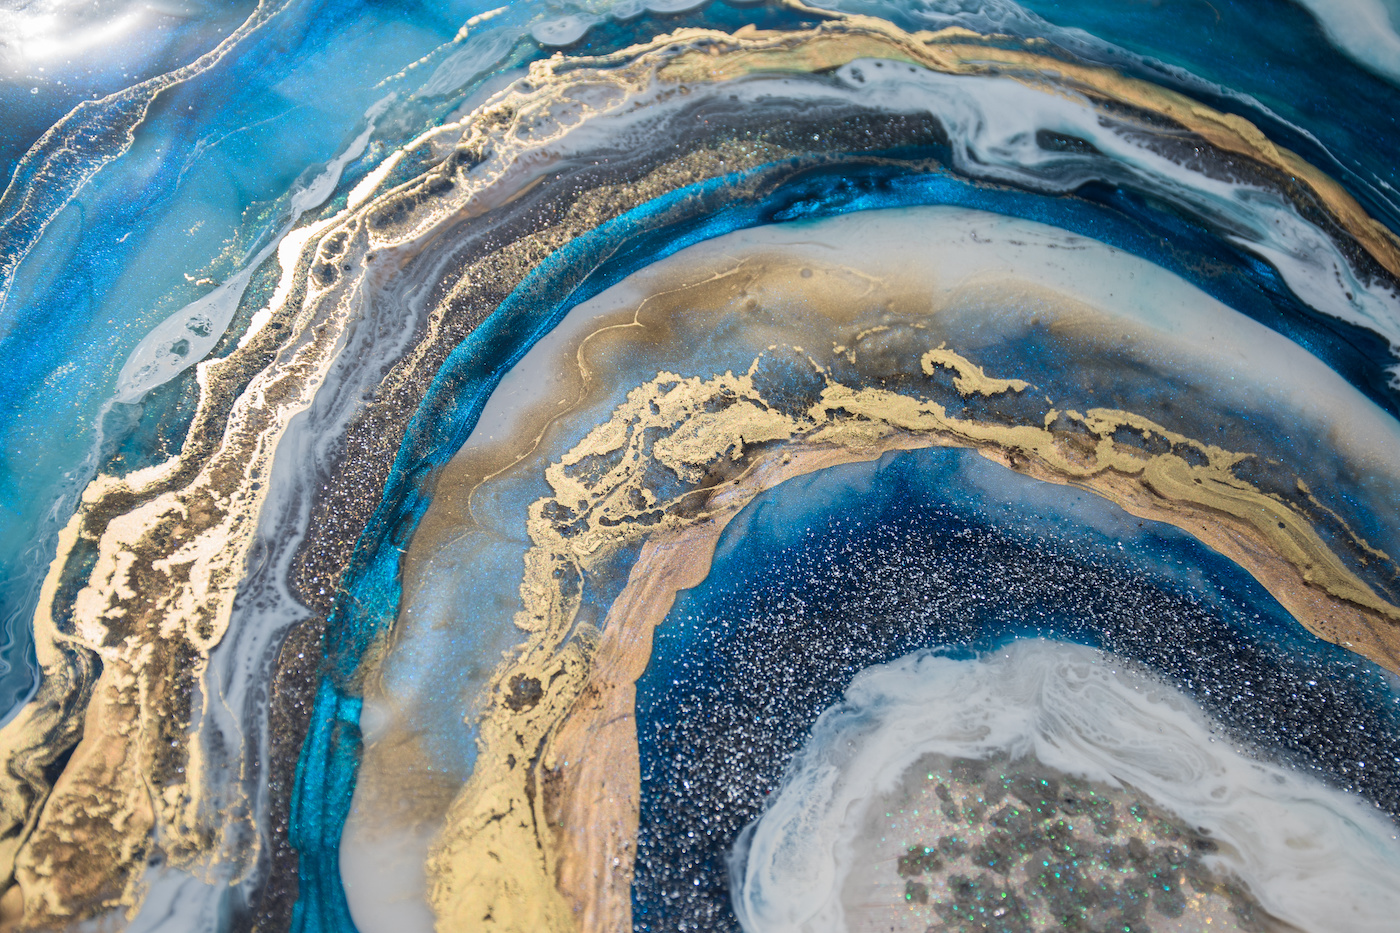 Blue resin geode abstract art